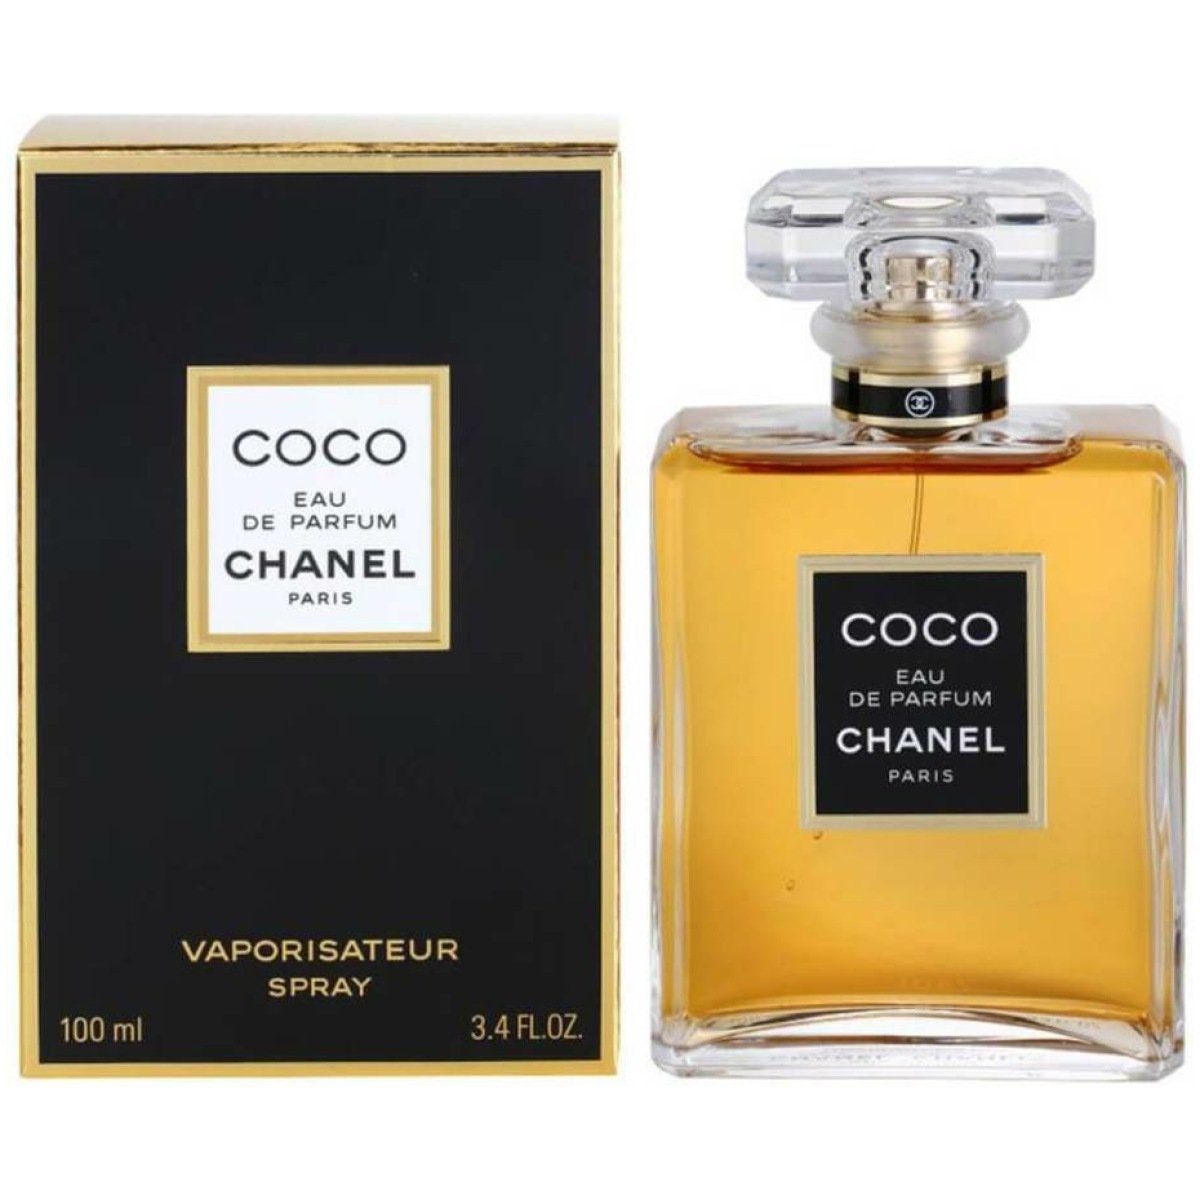 Chanel Coco EDP Perfume For Women 100ml